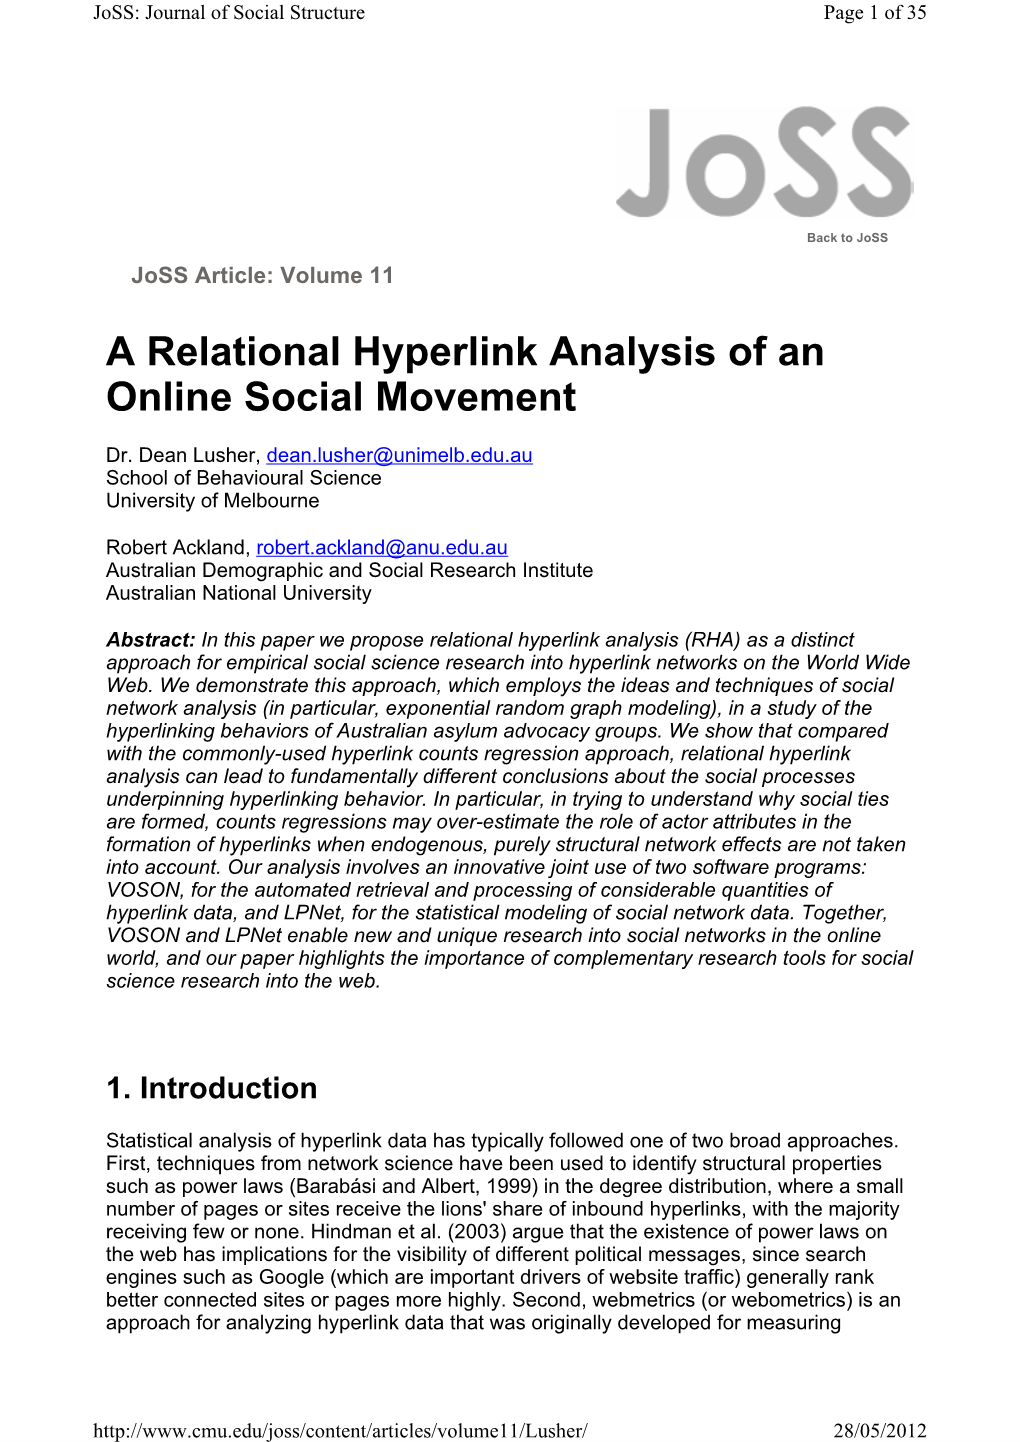 A Relational Hyperlink Analysis of an Online Social Movement